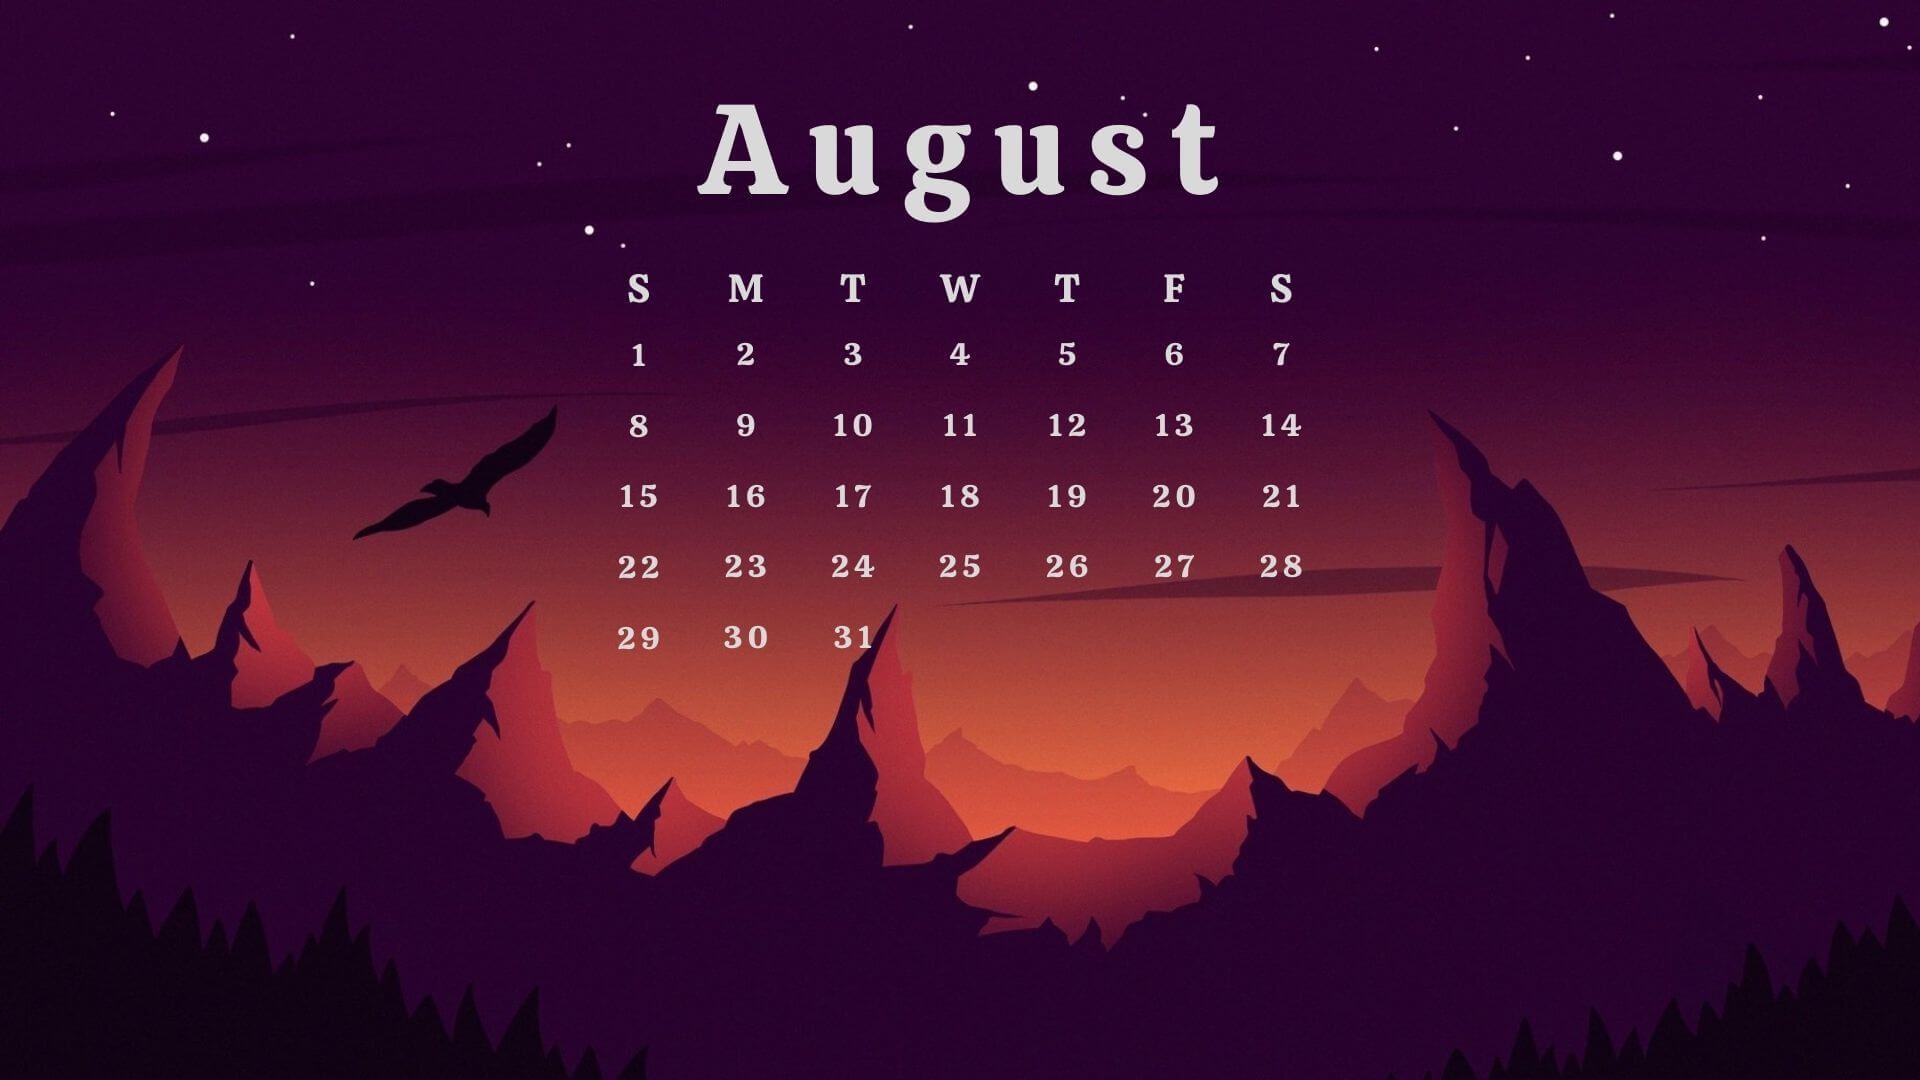 110 Best August Calendar ideas in 2021